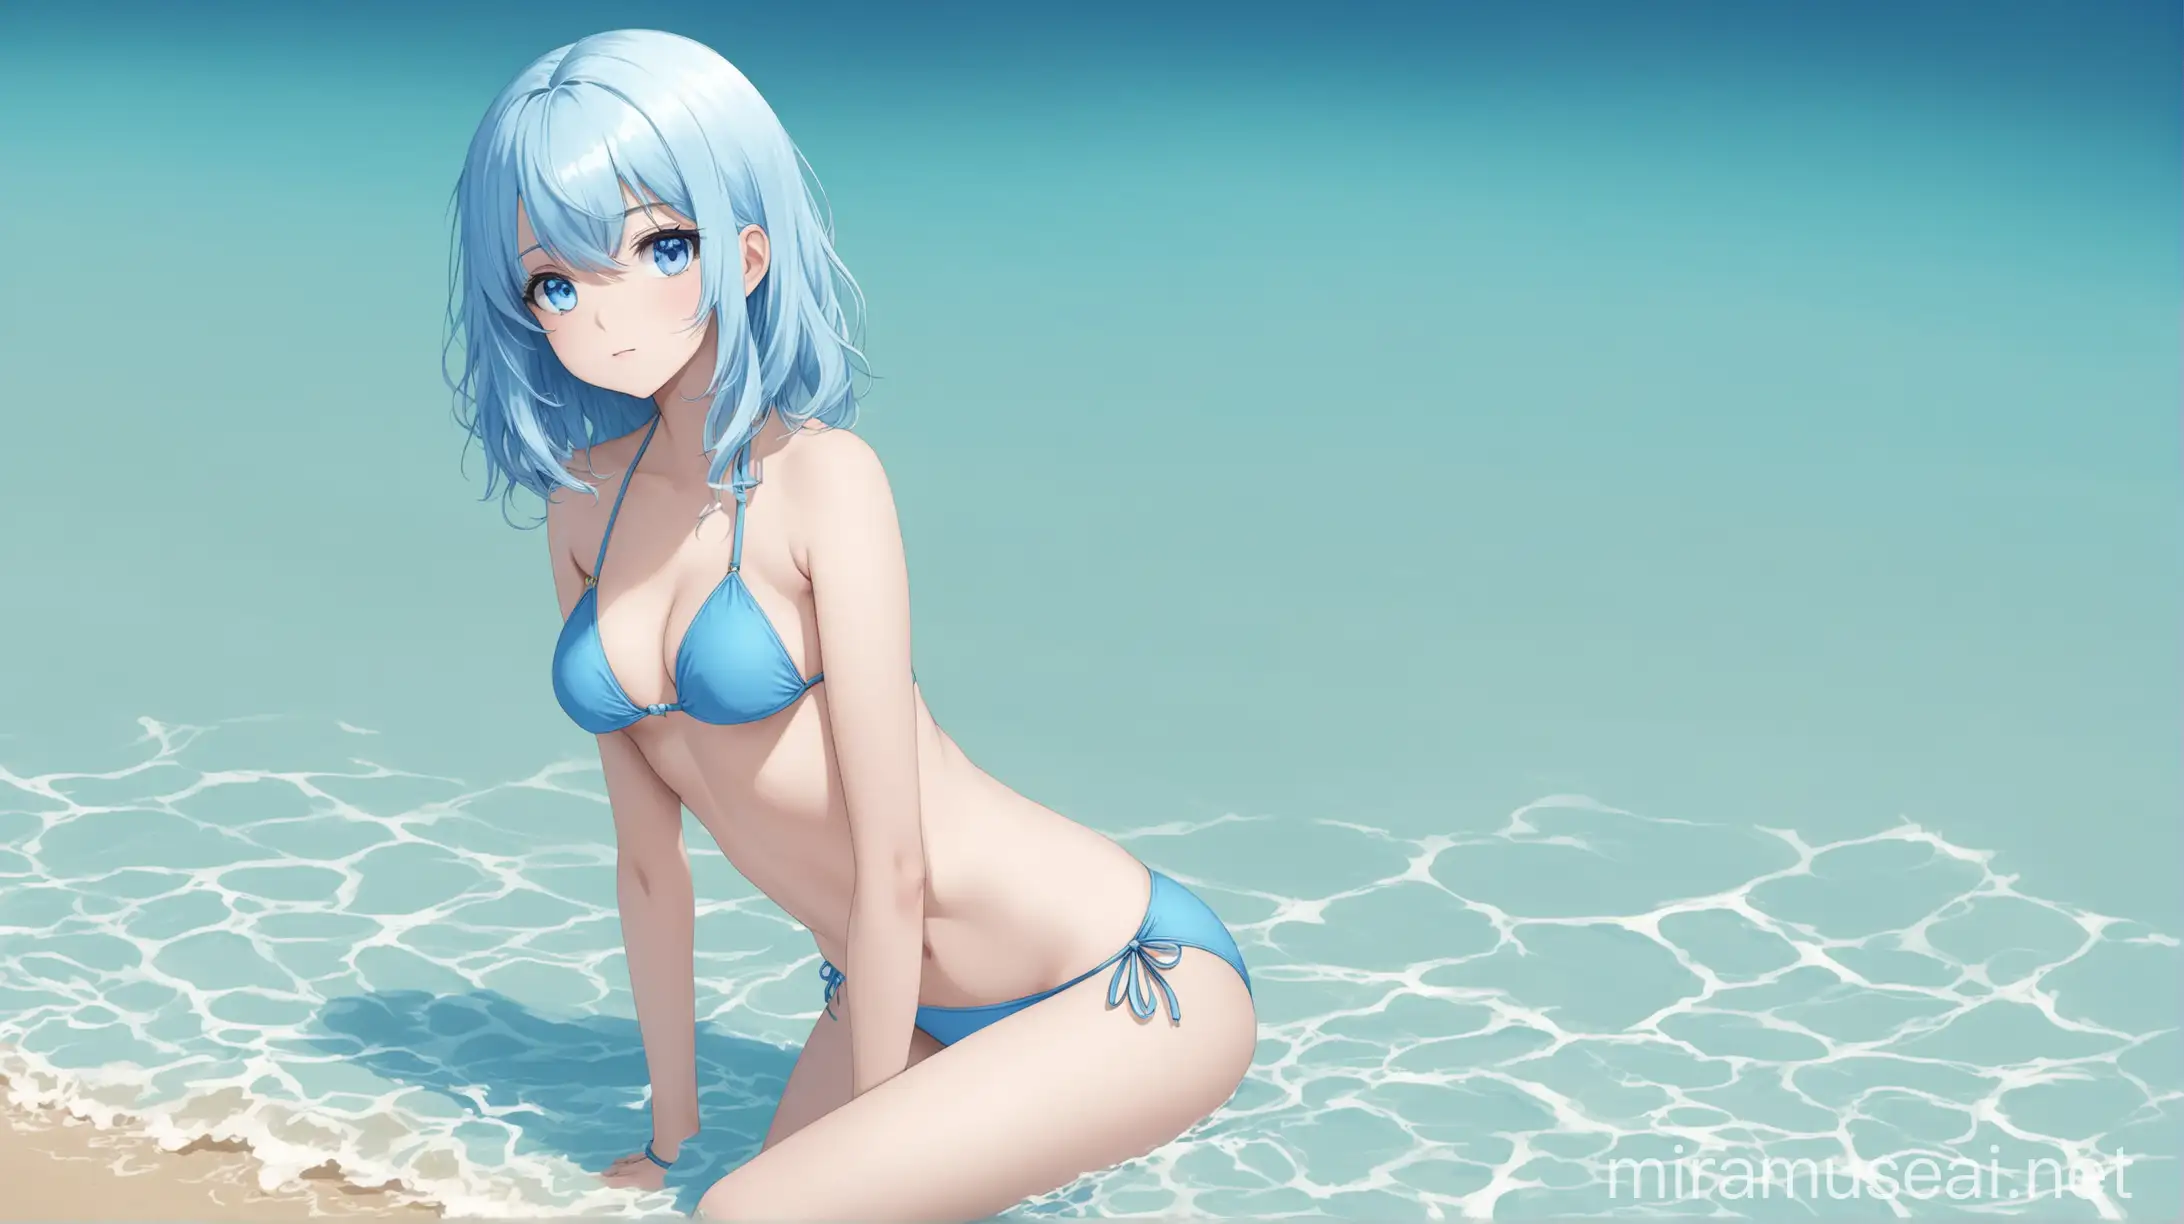 A full-length girl, light blue hair color , blue eyes , in a blue bikini, medium breast size